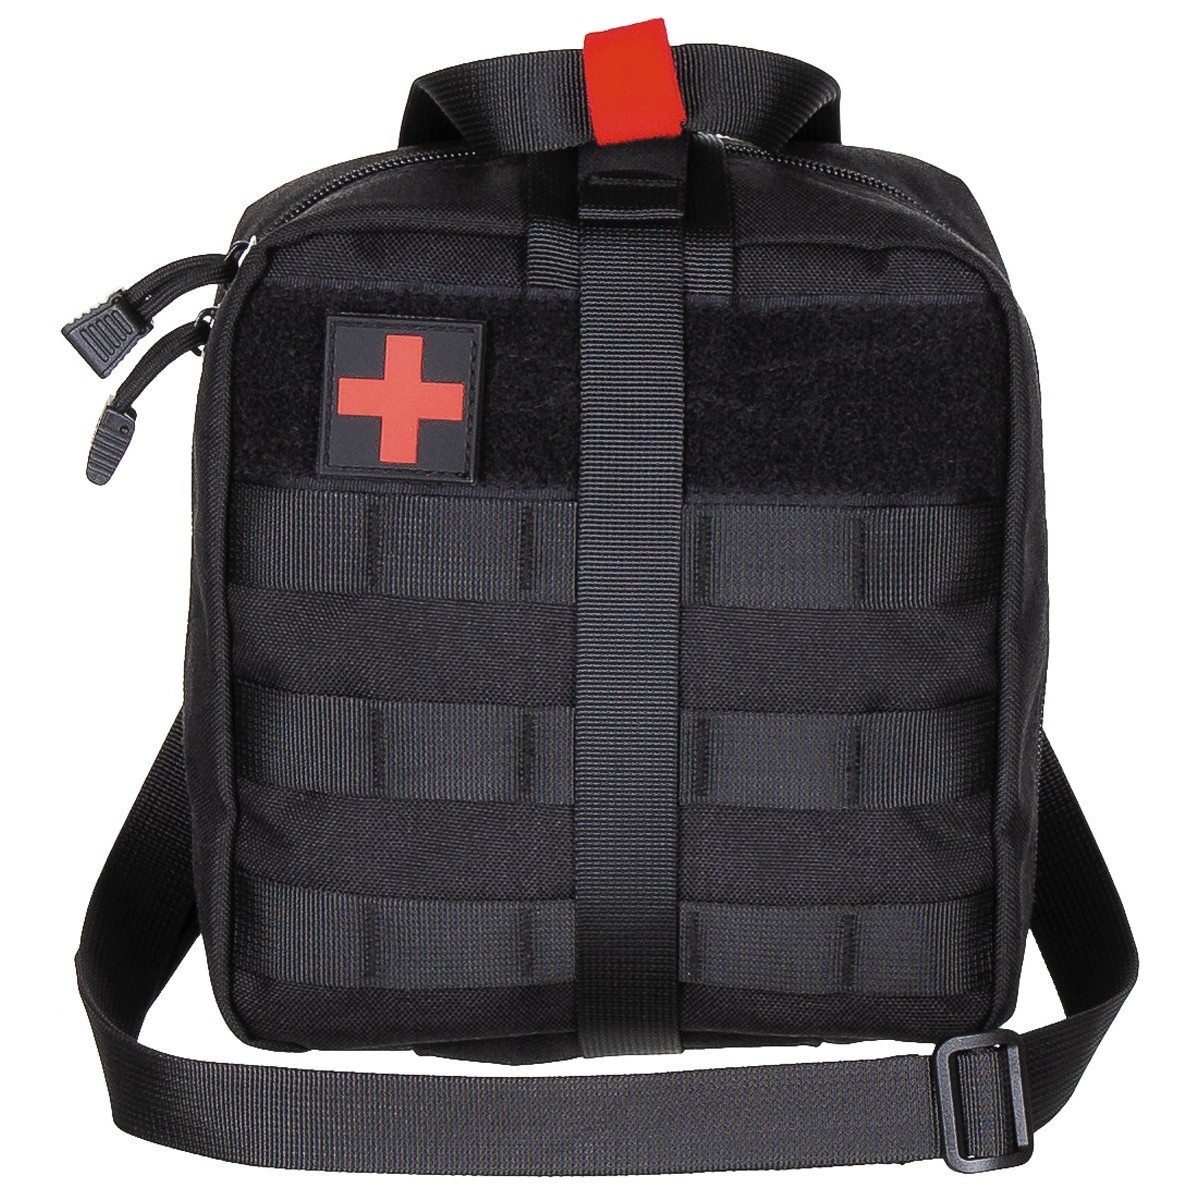 MFH First aid bag large MOLLE - BK